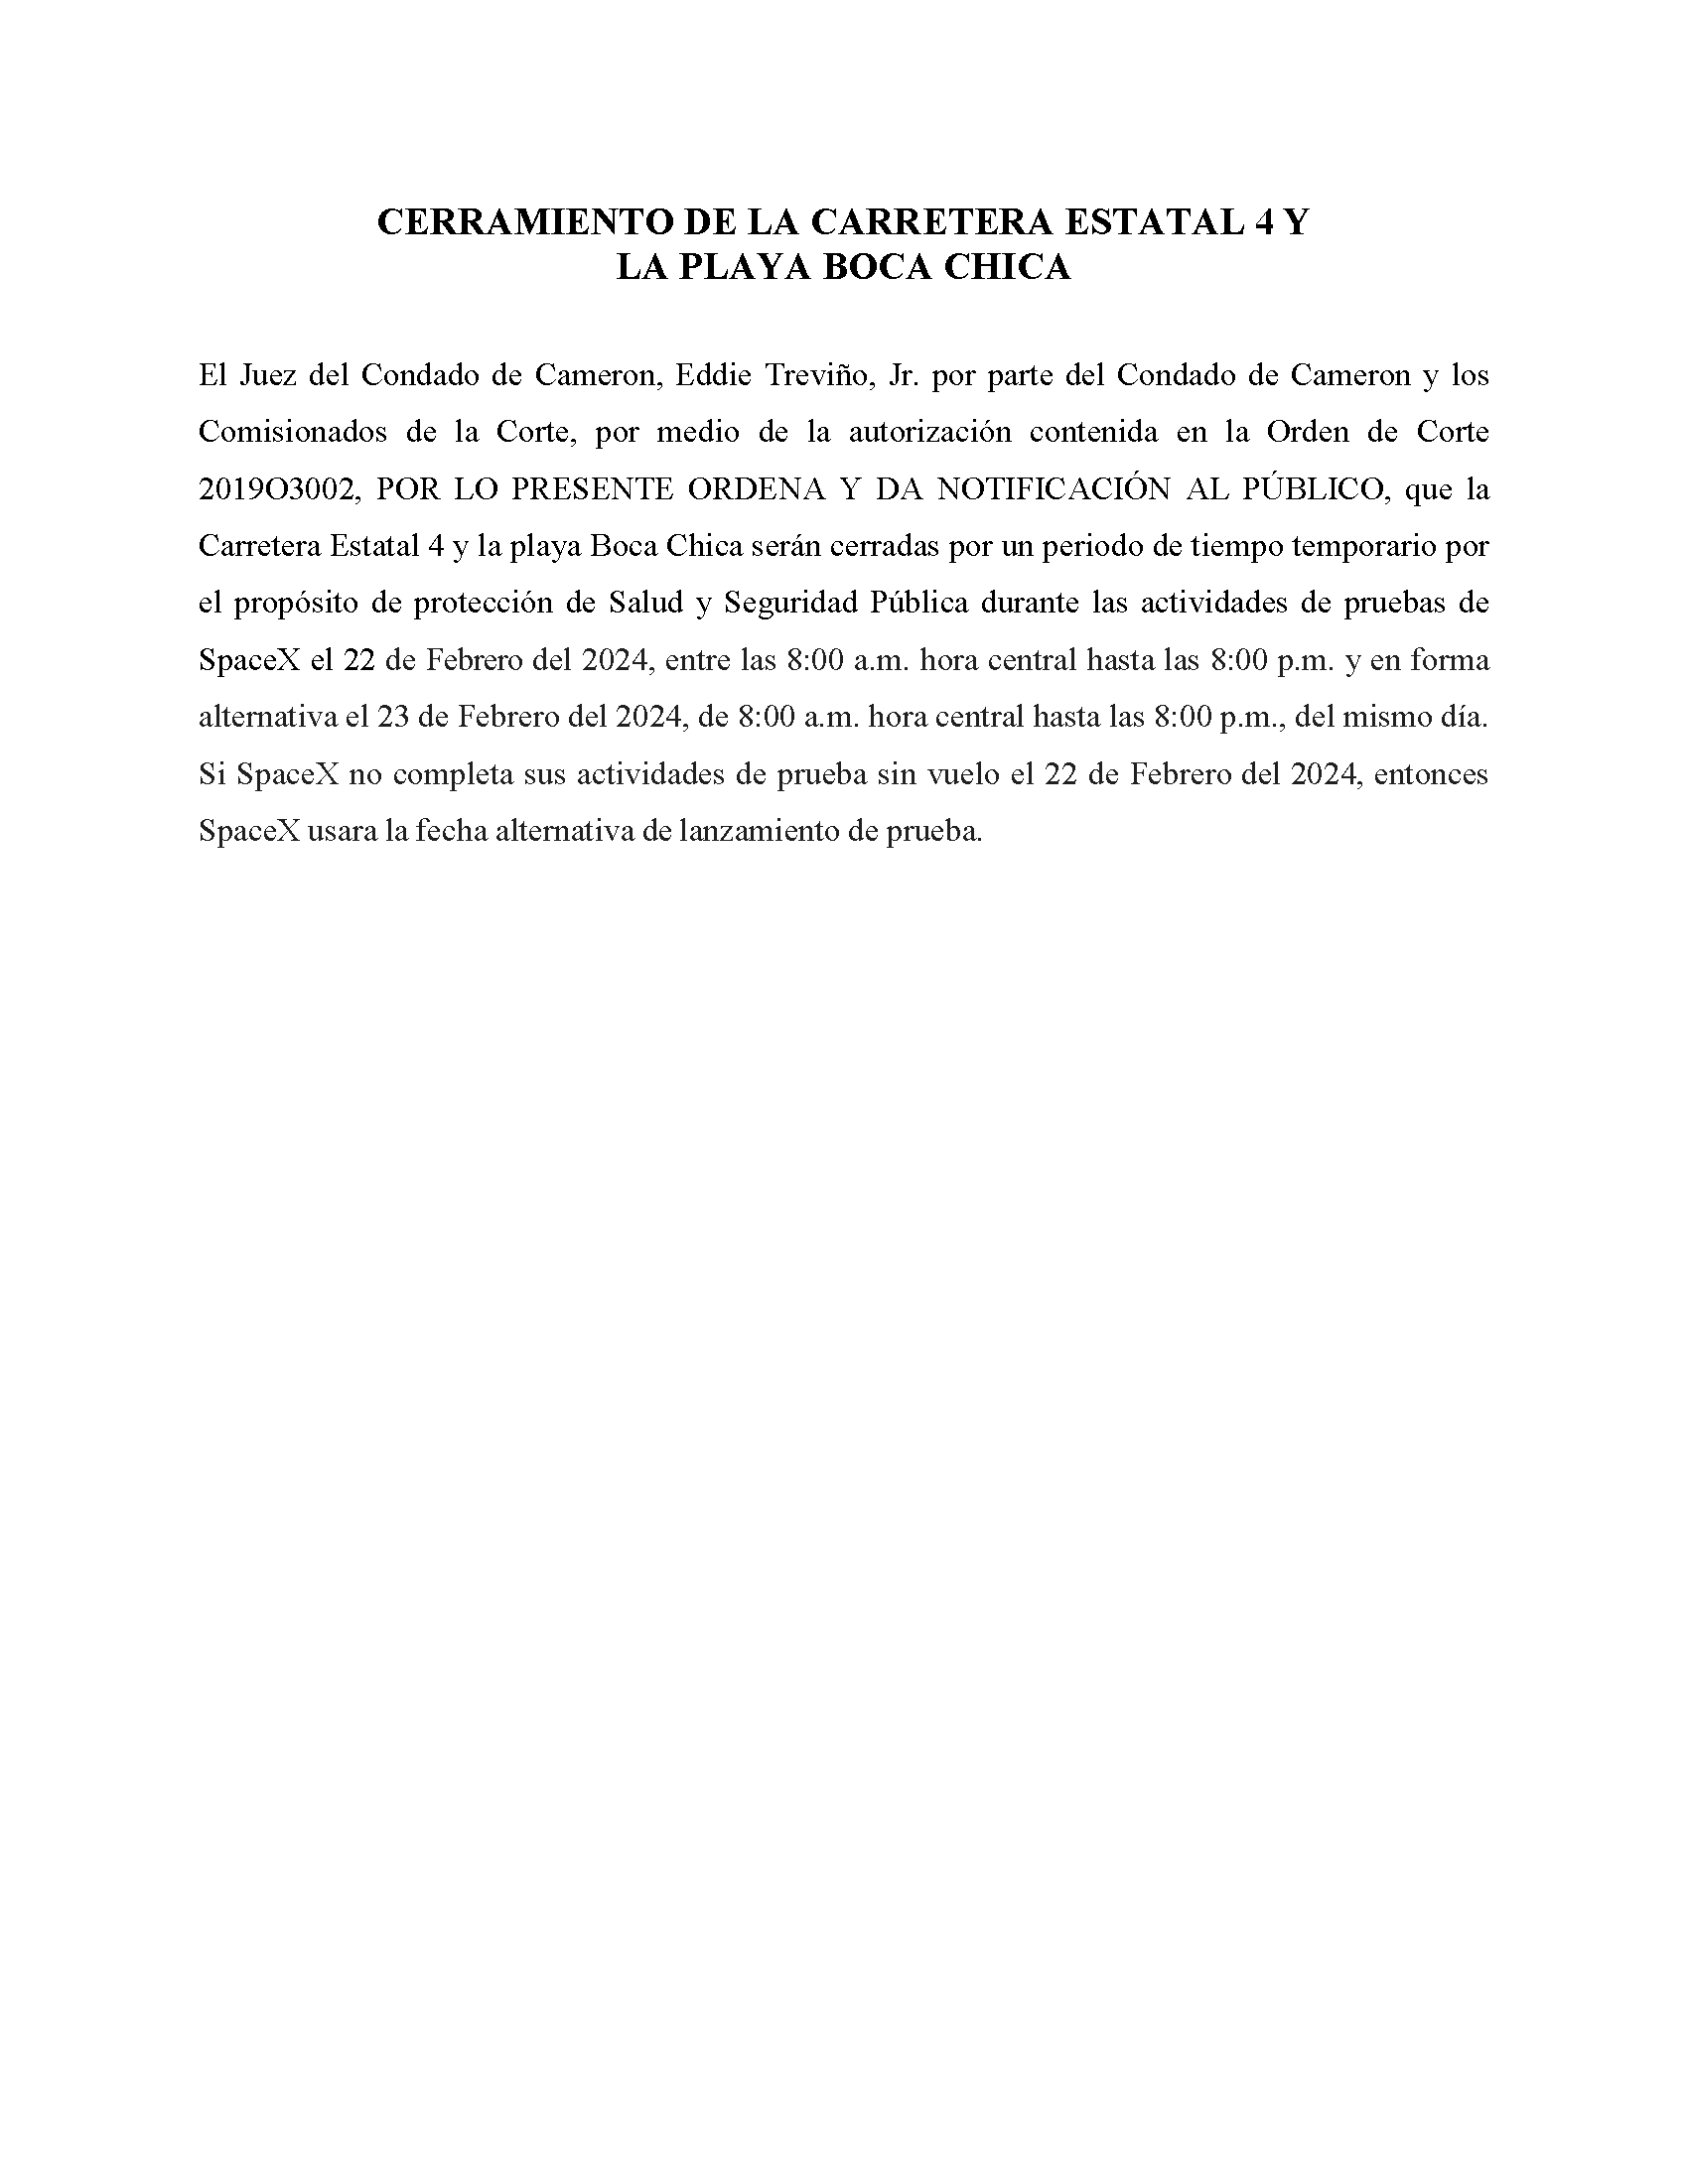 ORDER.CLOSURE OF HIGHWAY 4 Y LA PLAYA BOCA CHICA.SPANISH.02.22.2024